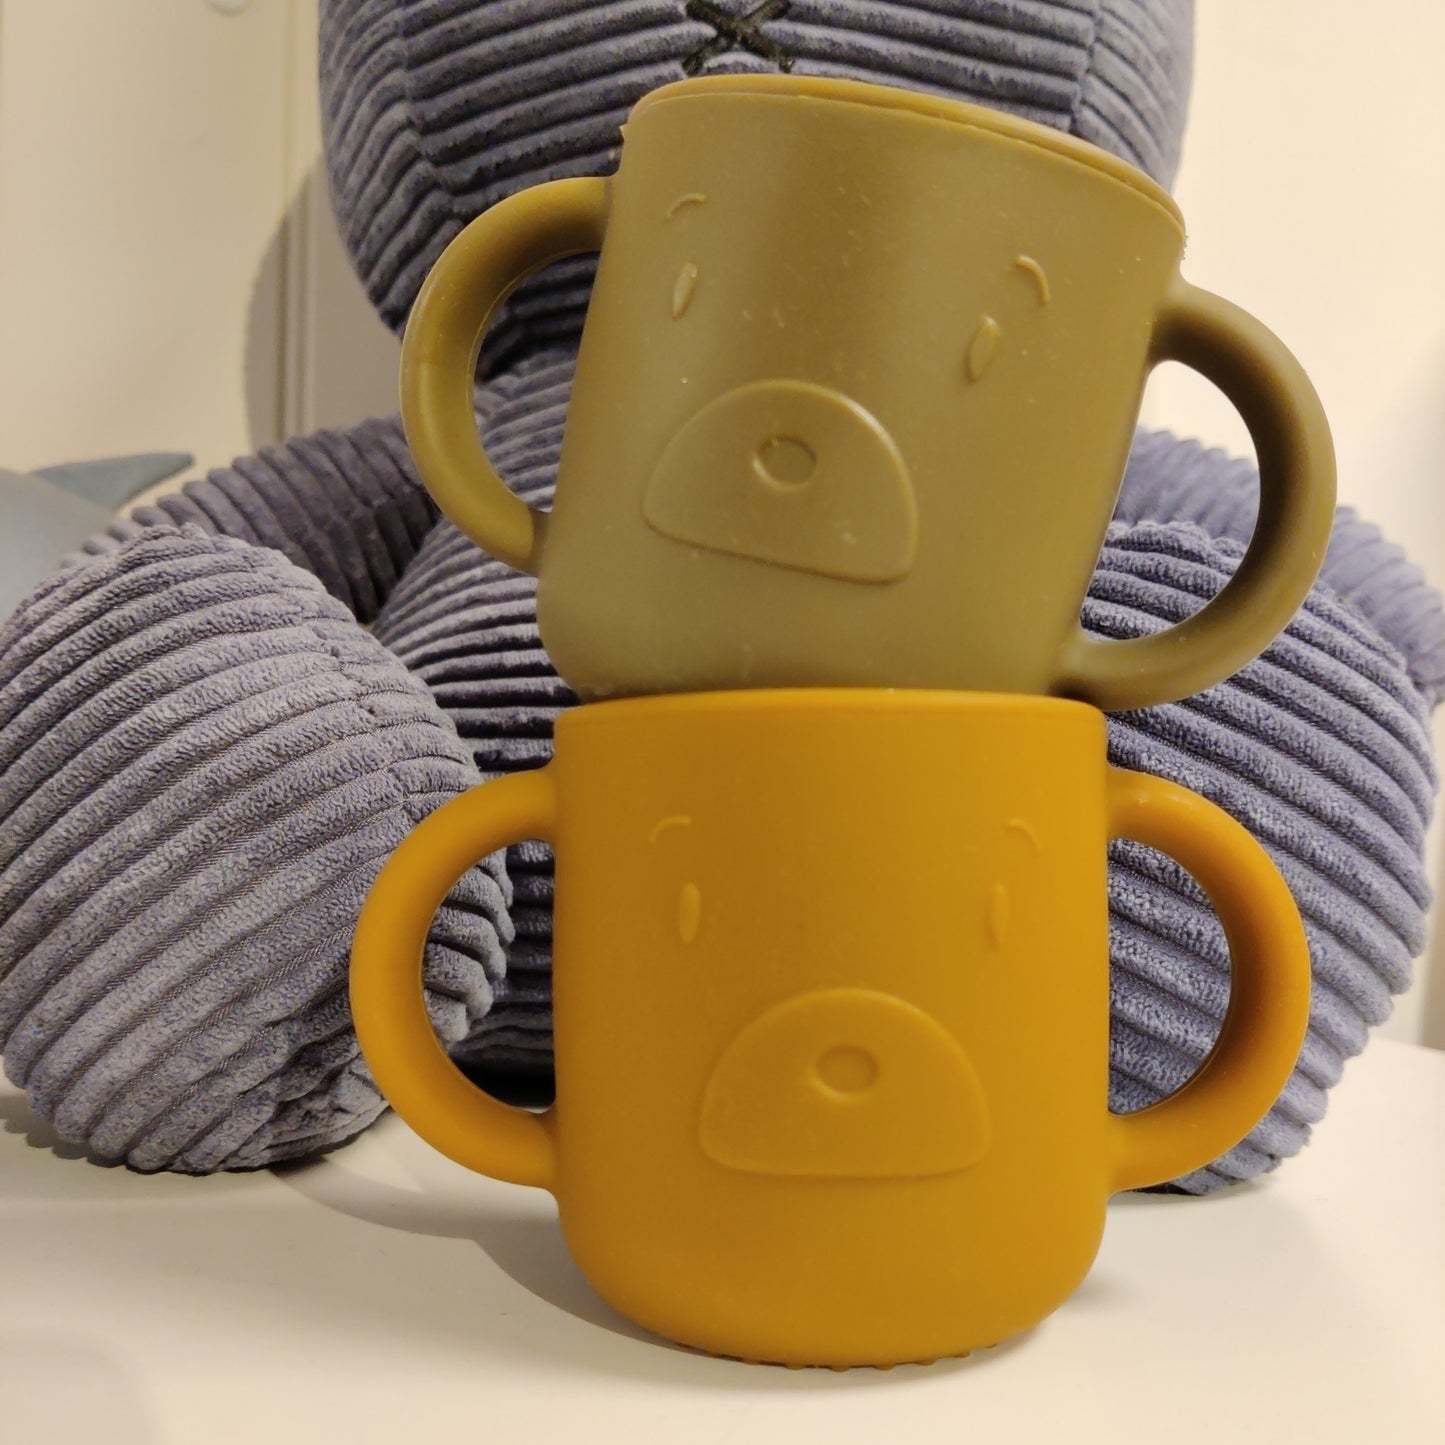 Gene cup - Bear Mustard